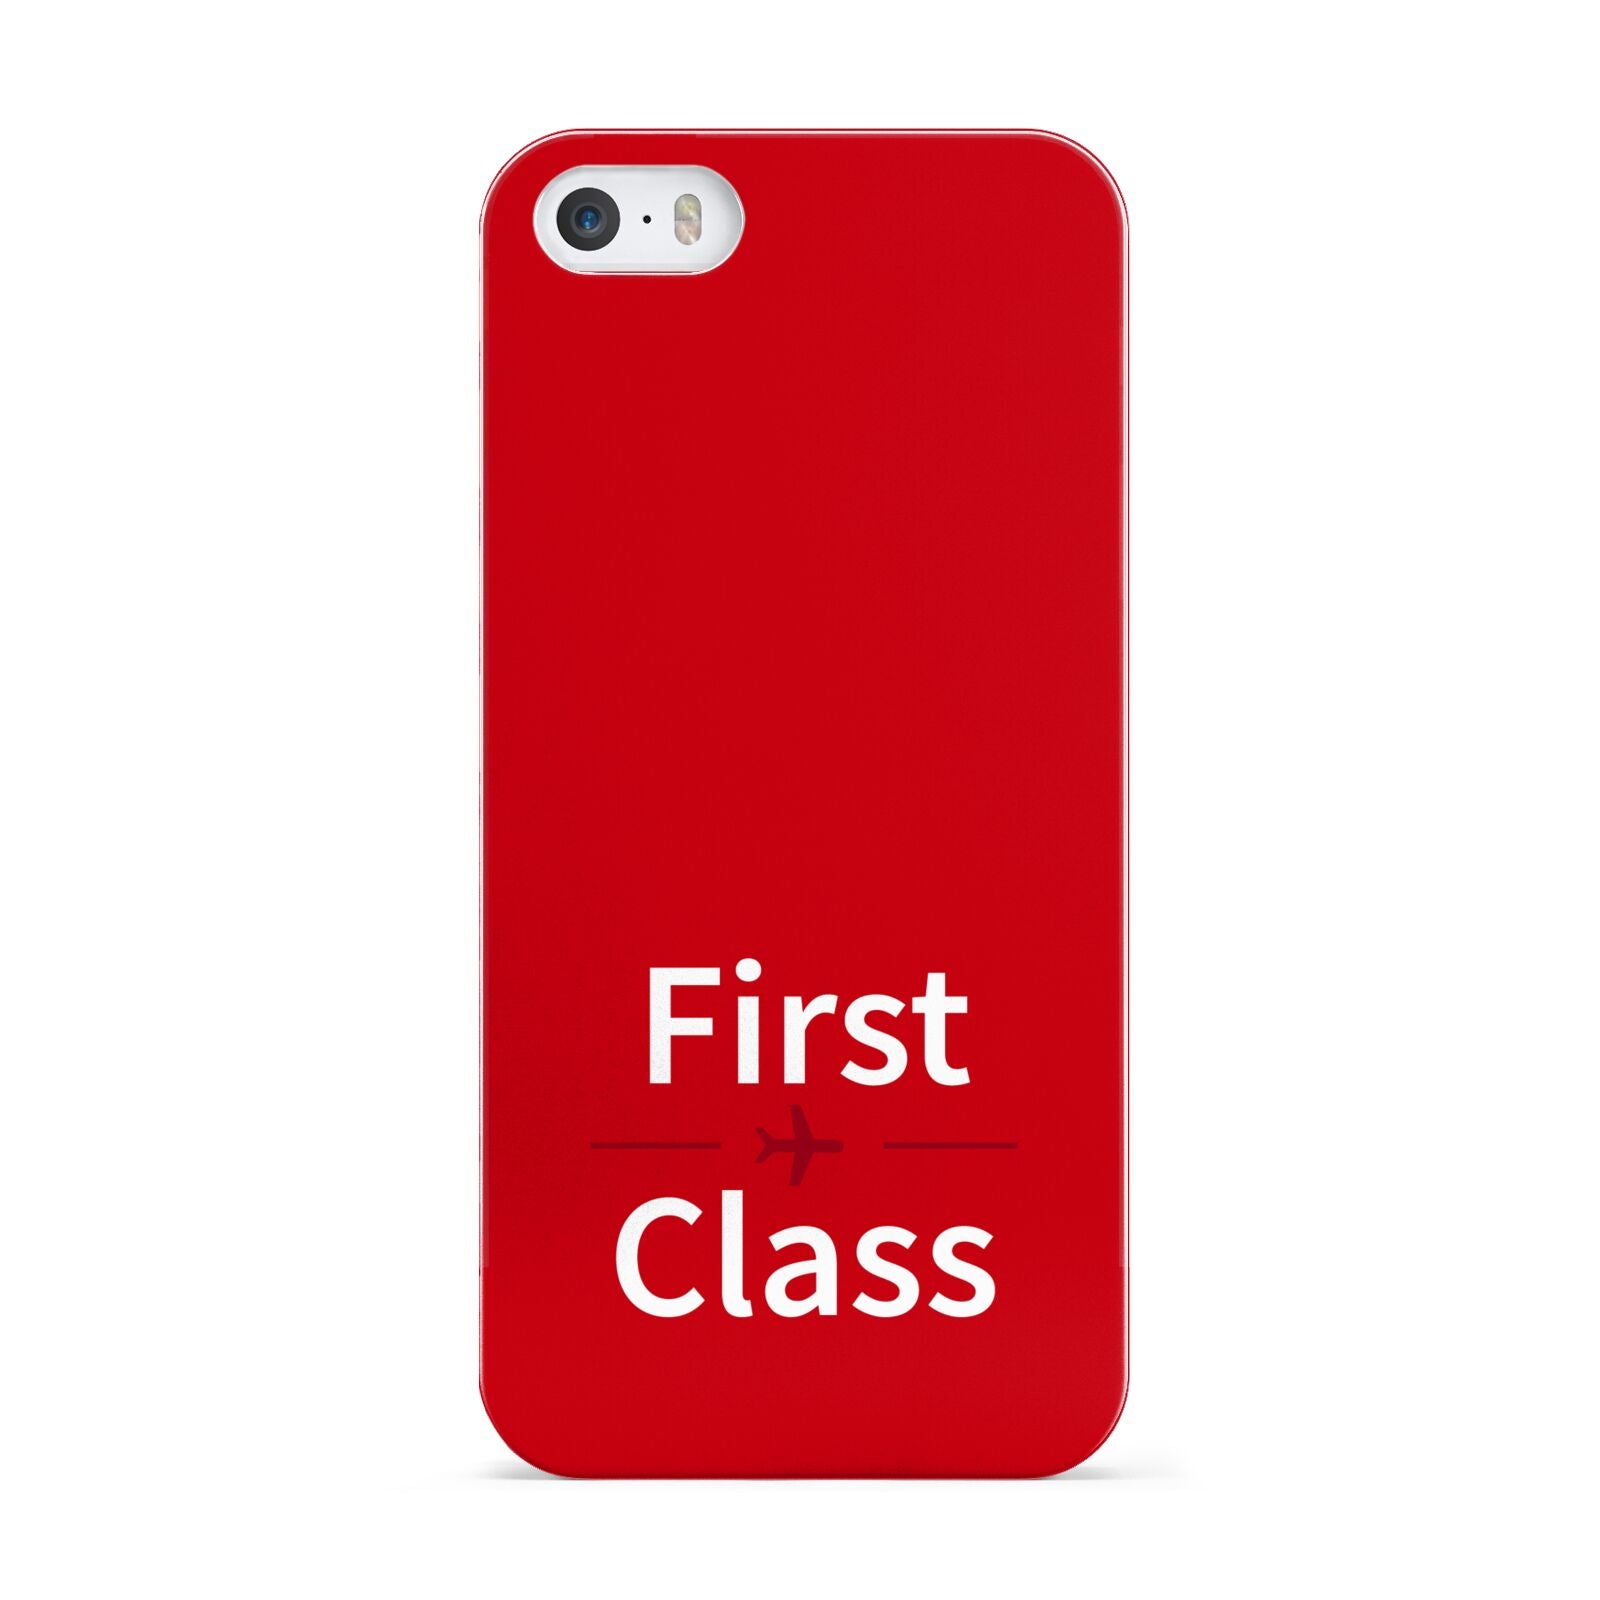 First Class Apple iPhone 5 Case